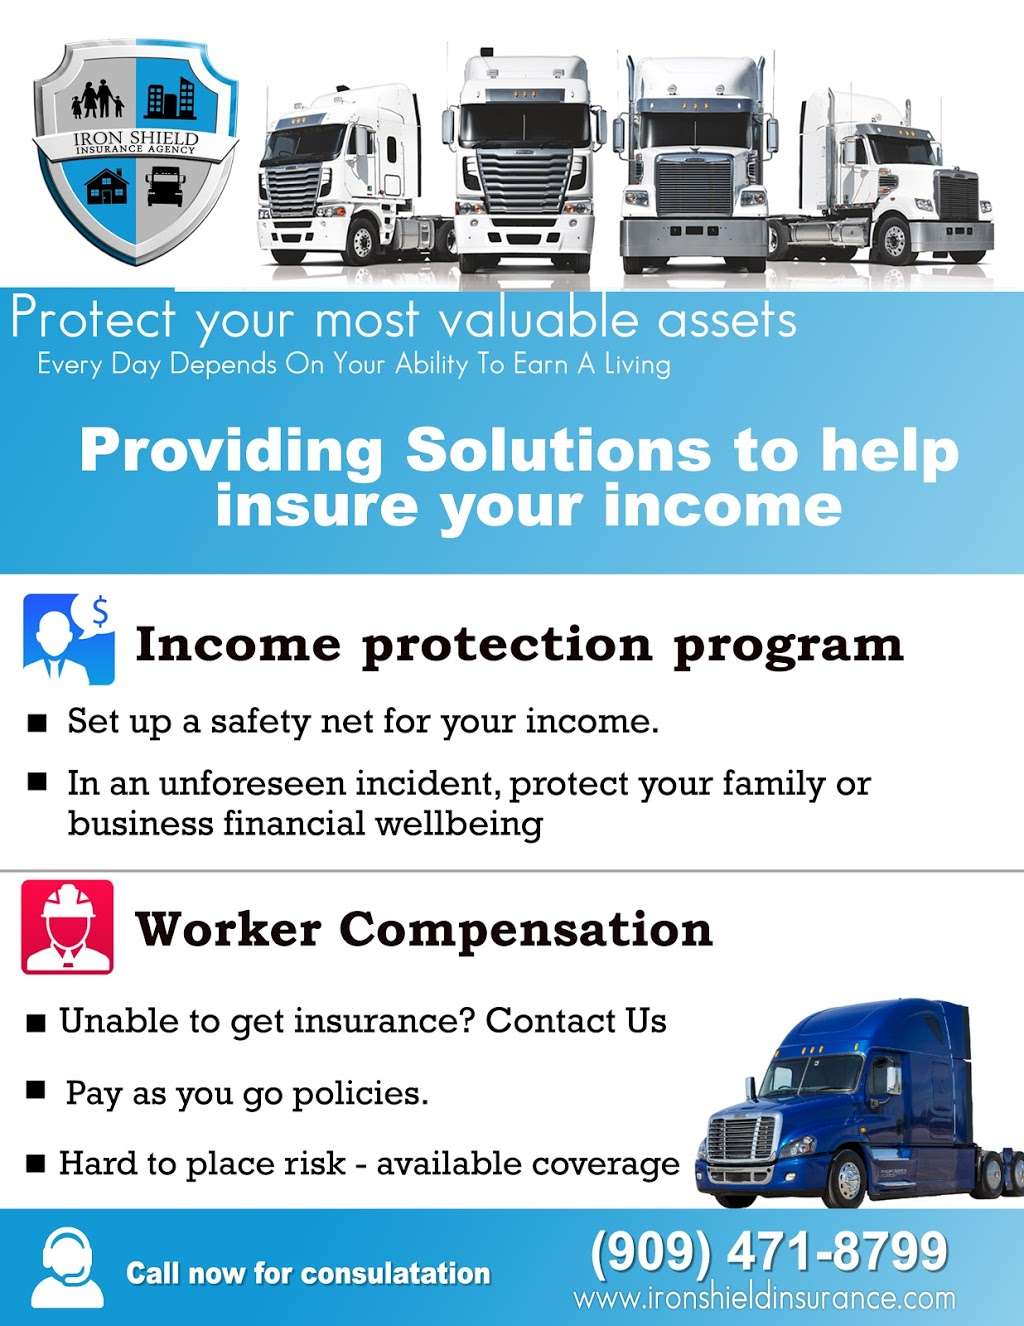 Iron Shield Insurance Agency LLC | Commercial Auto Insurance, He | 10641 Mulberry Ave, Fontana, CA 92337, USA | Phone: (888) 664-8488